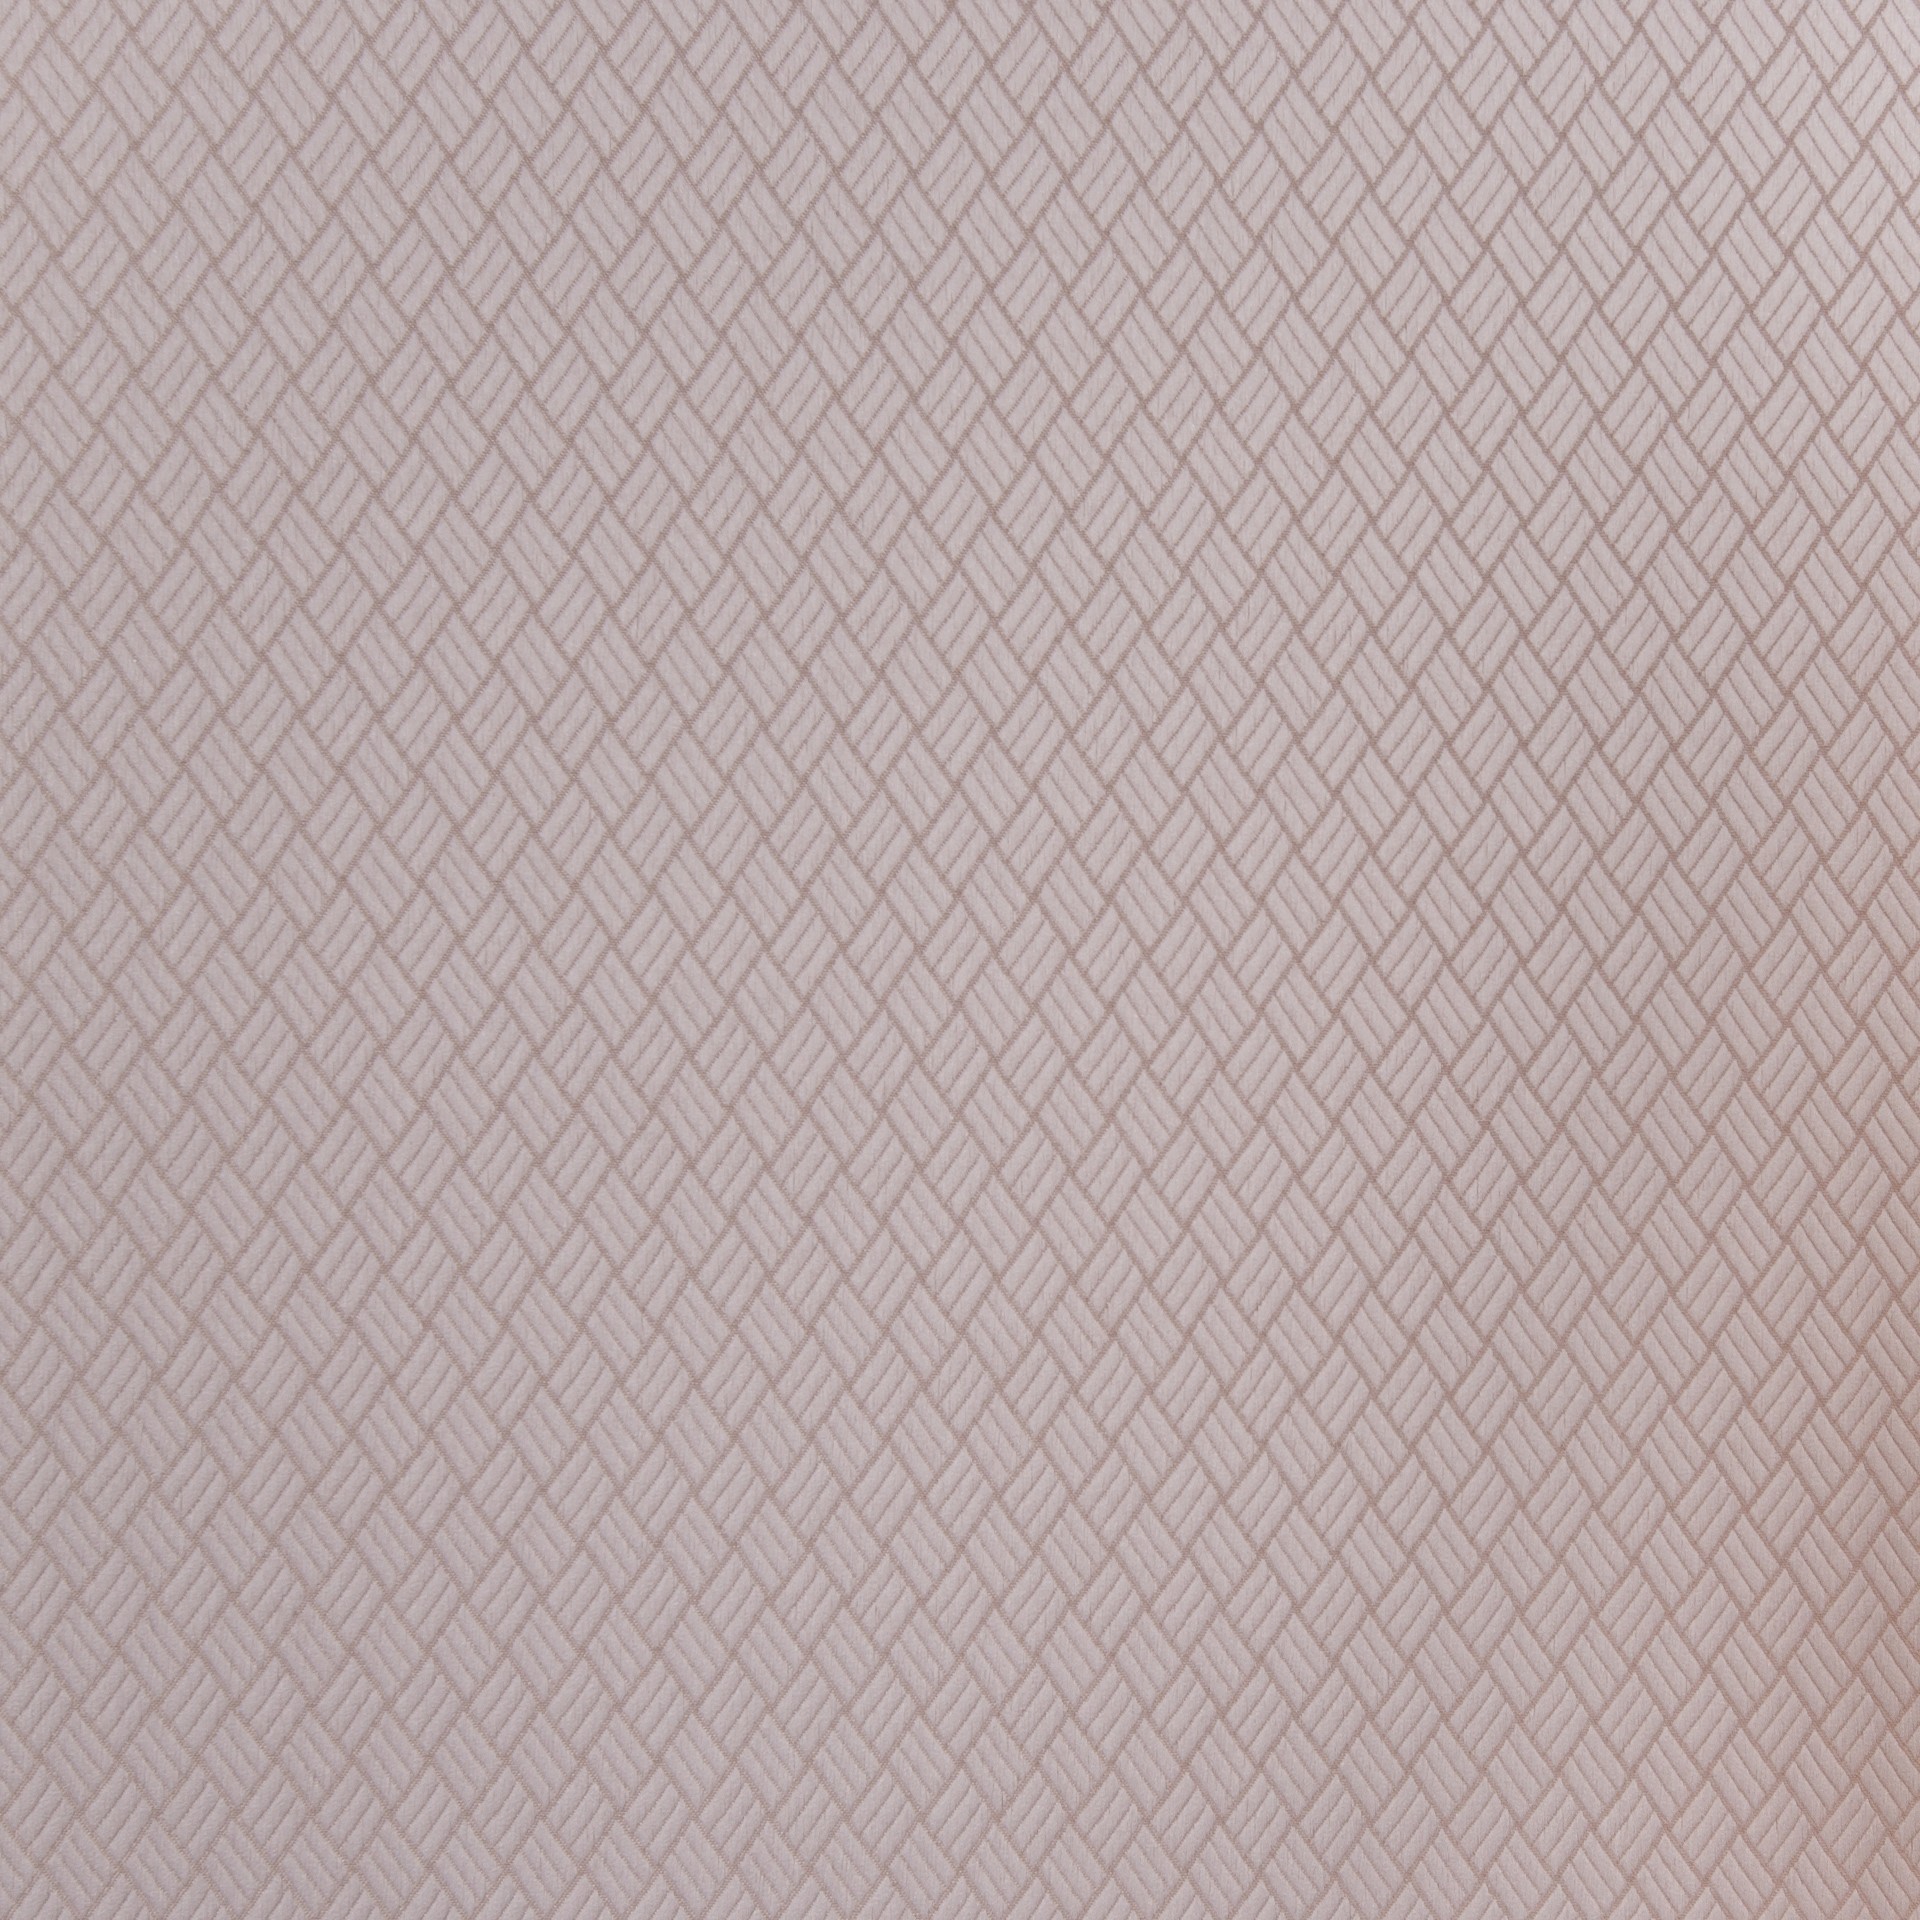 Ribbed Translucent Ivory Roller Blind Beige Fabric Detail